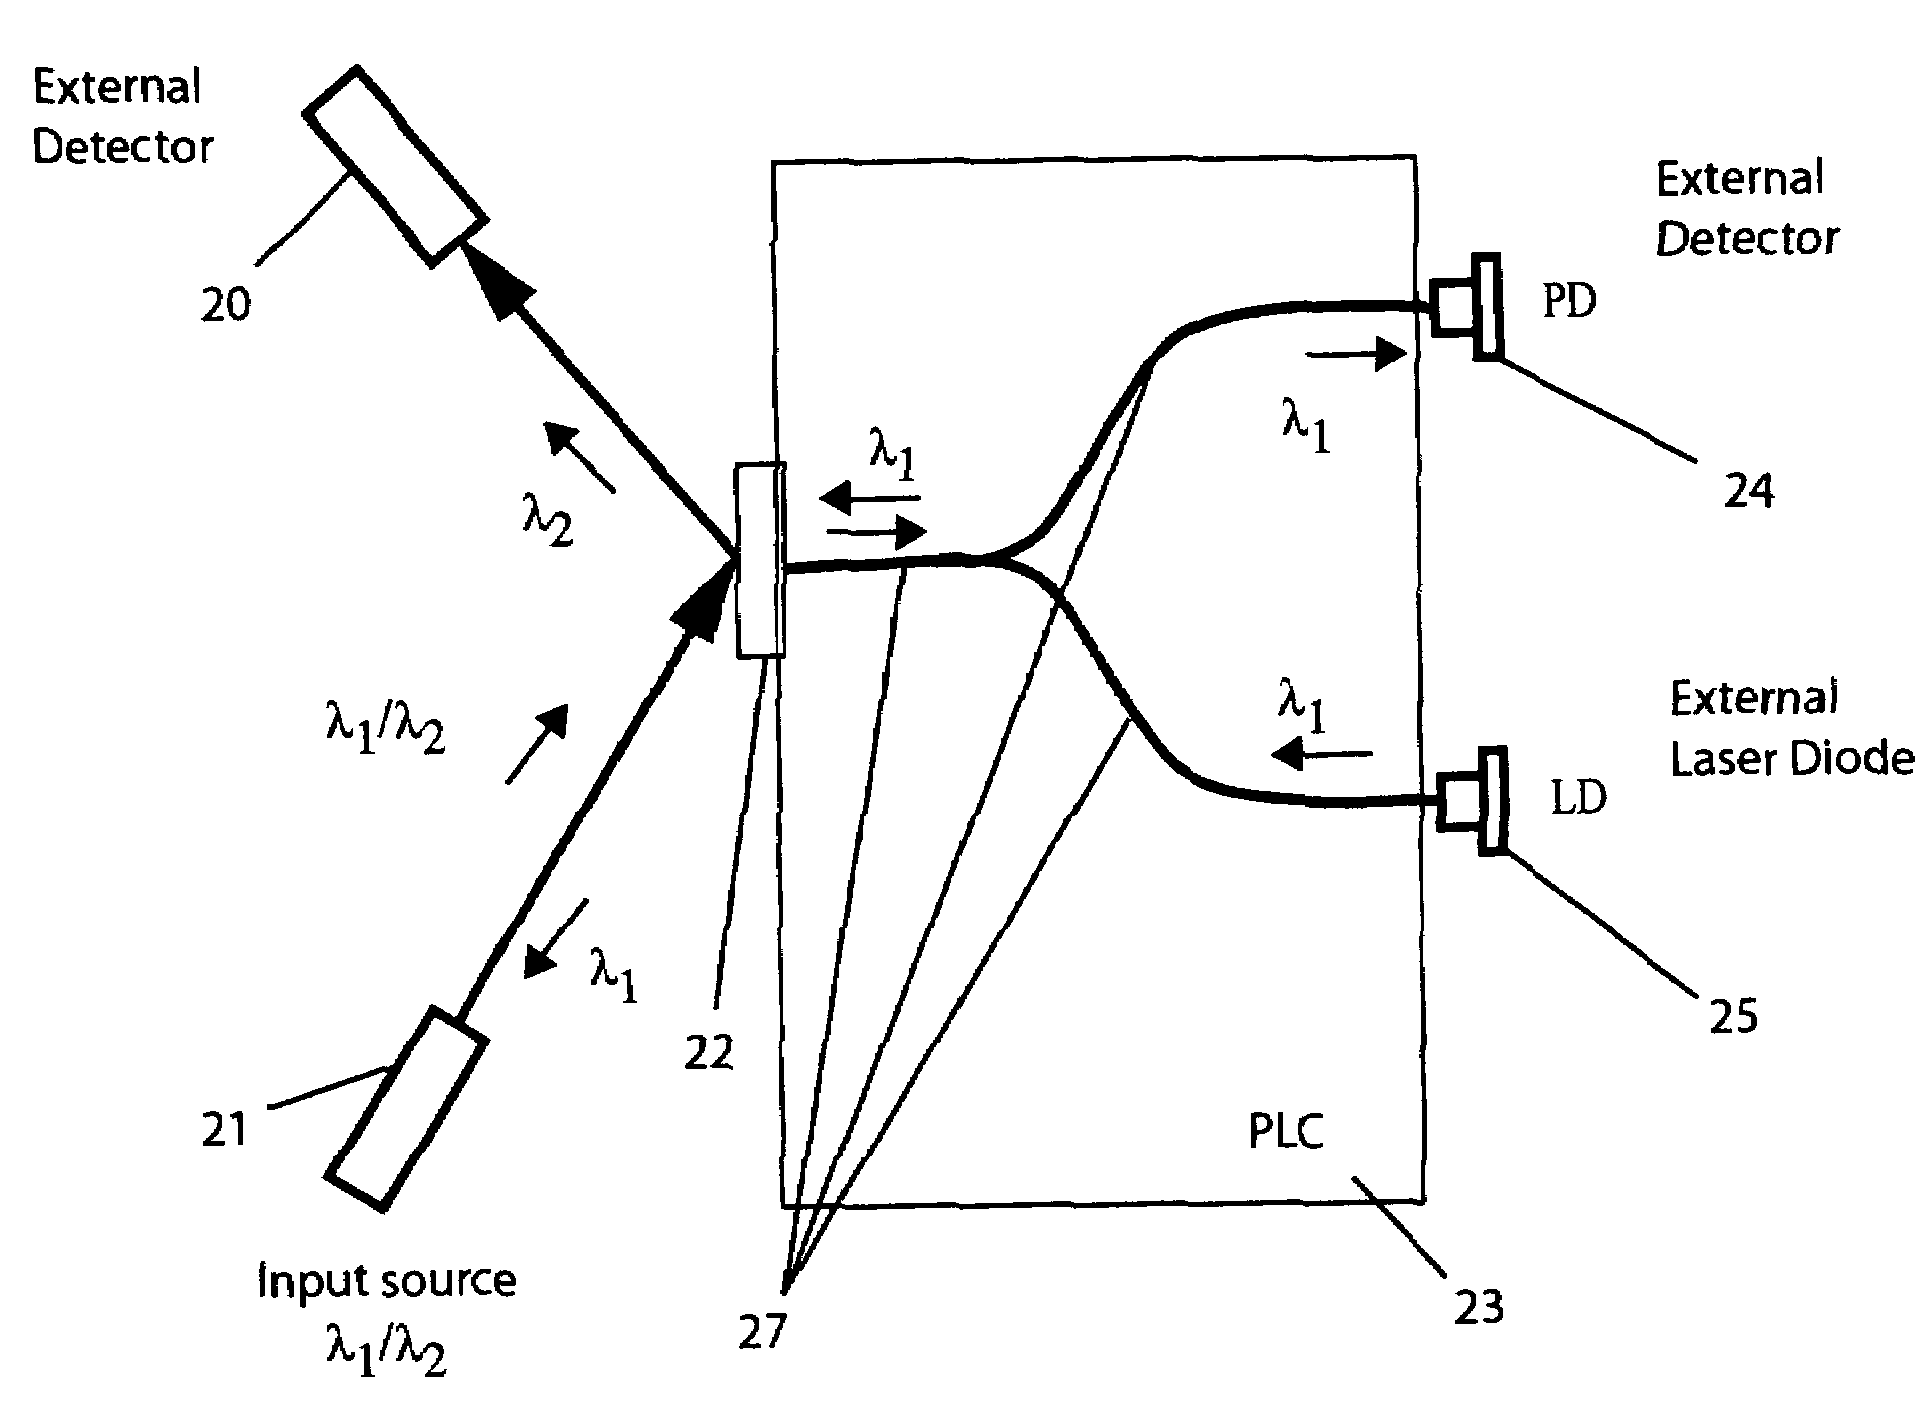 Bi-directional PLC transceiver device